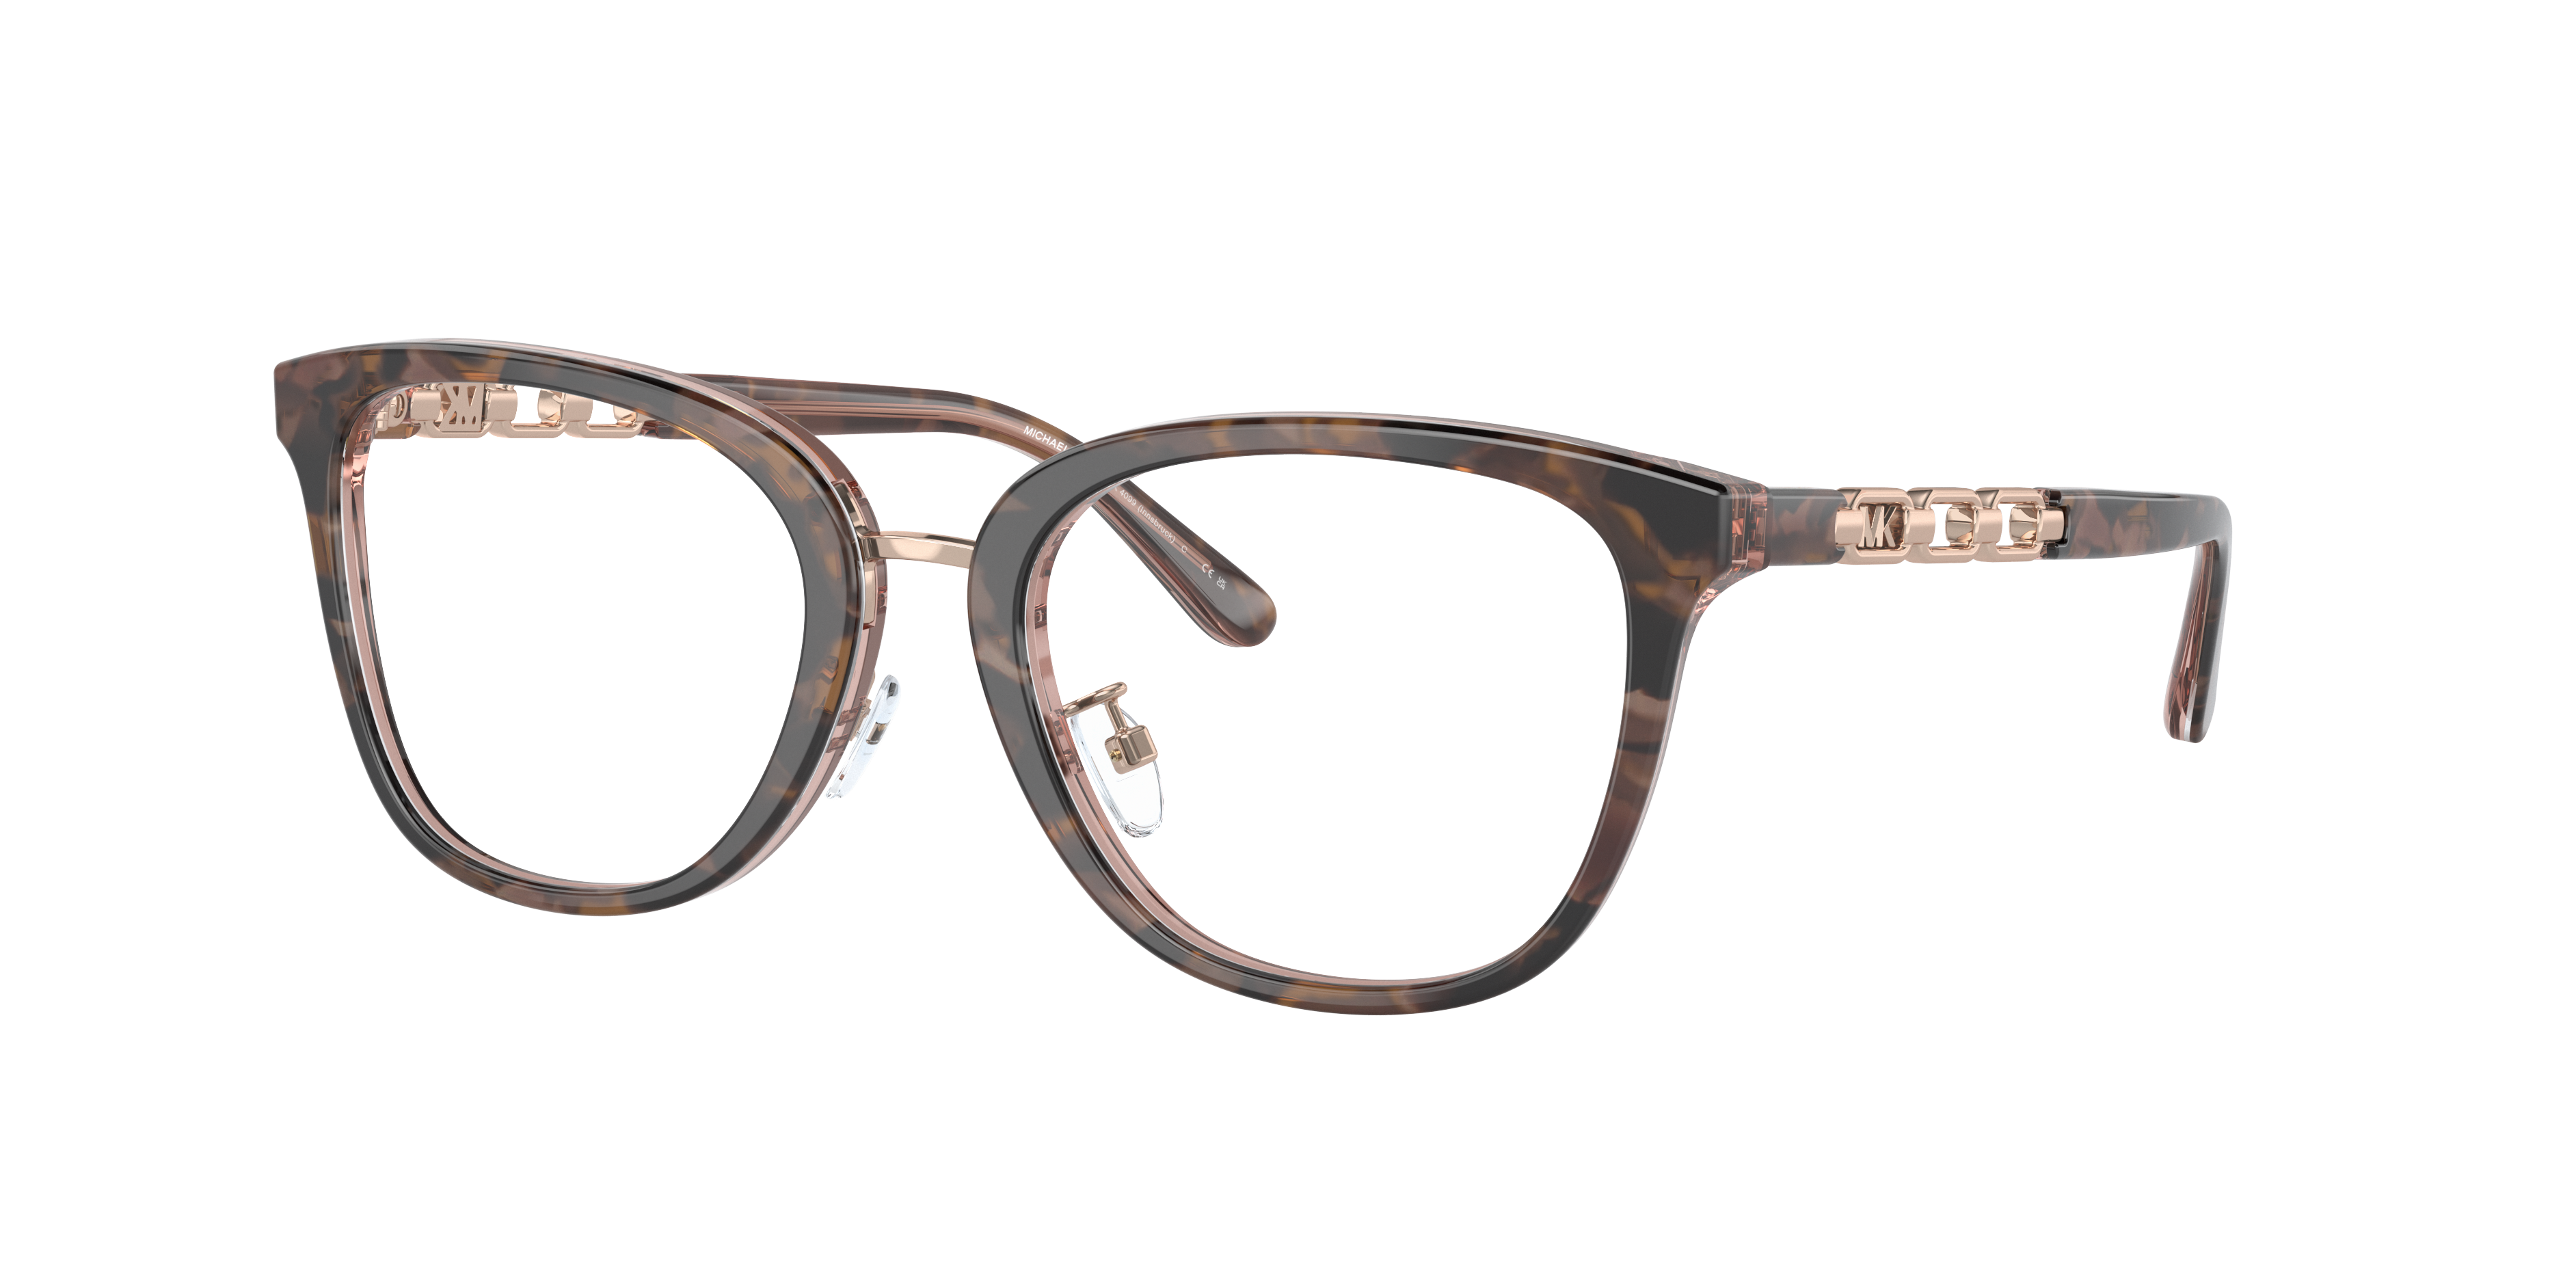 Michael Kors Eyeglasses and Prescription Glasses